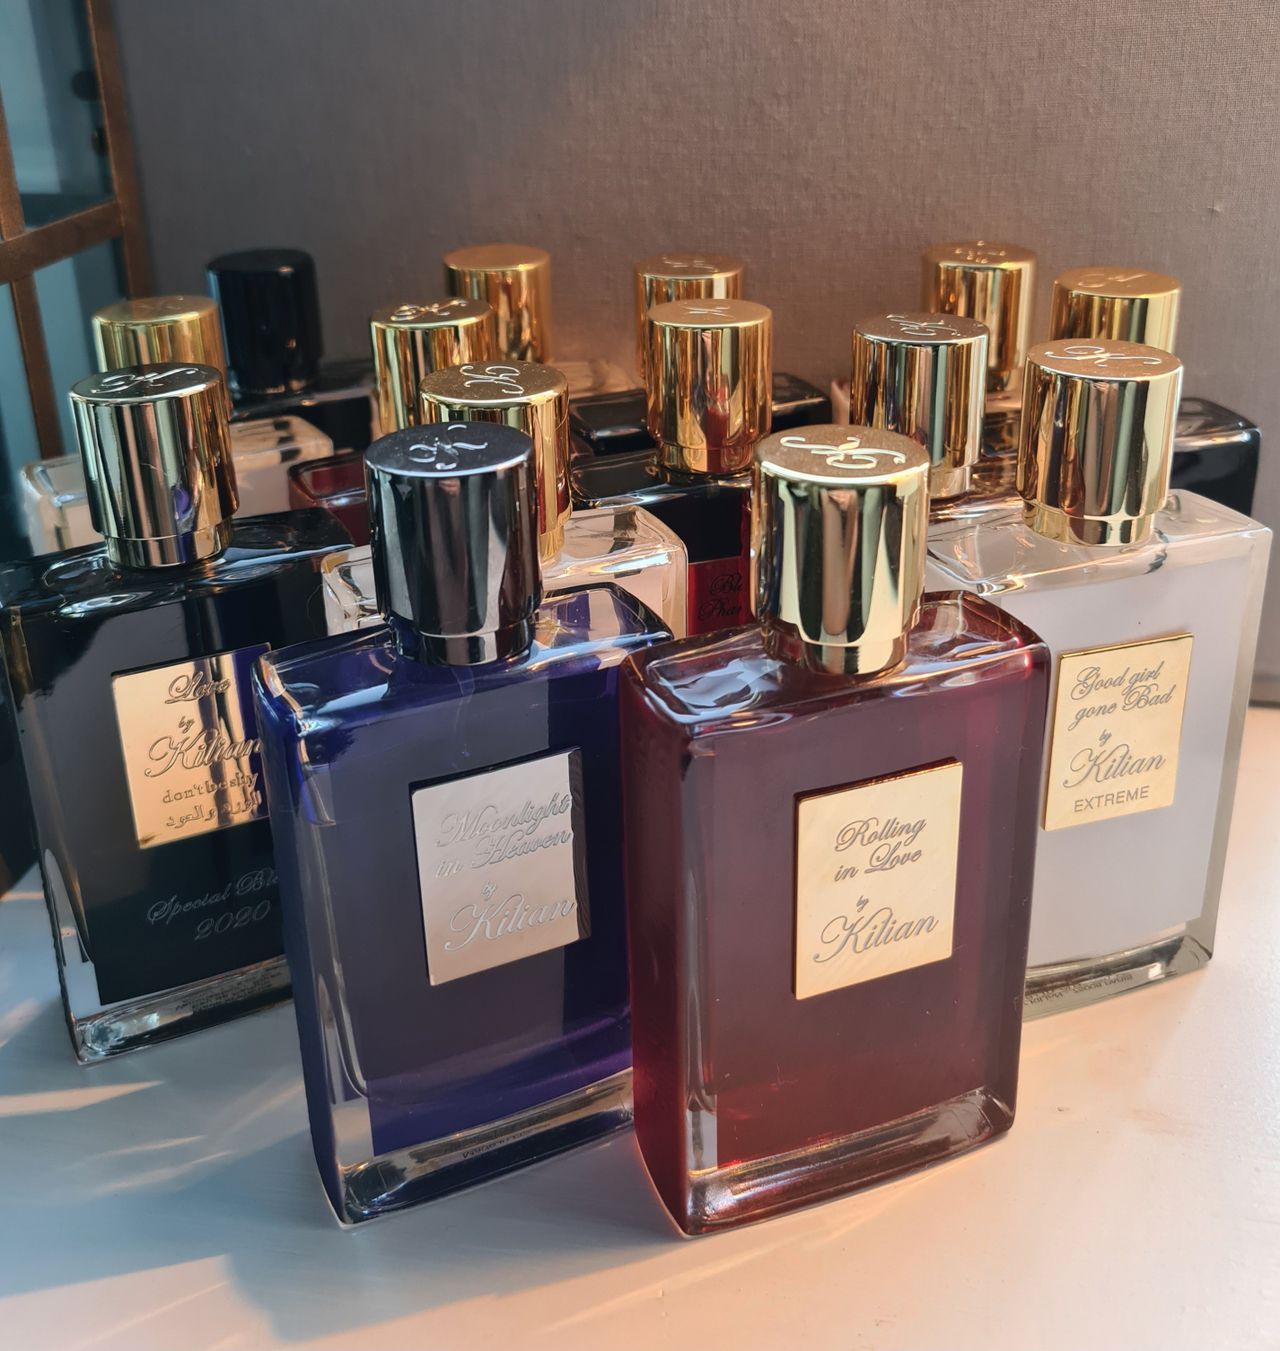 NEW Box LOUIS VUITTON Perfume Mille Feux Sample Travel Spray 2ml